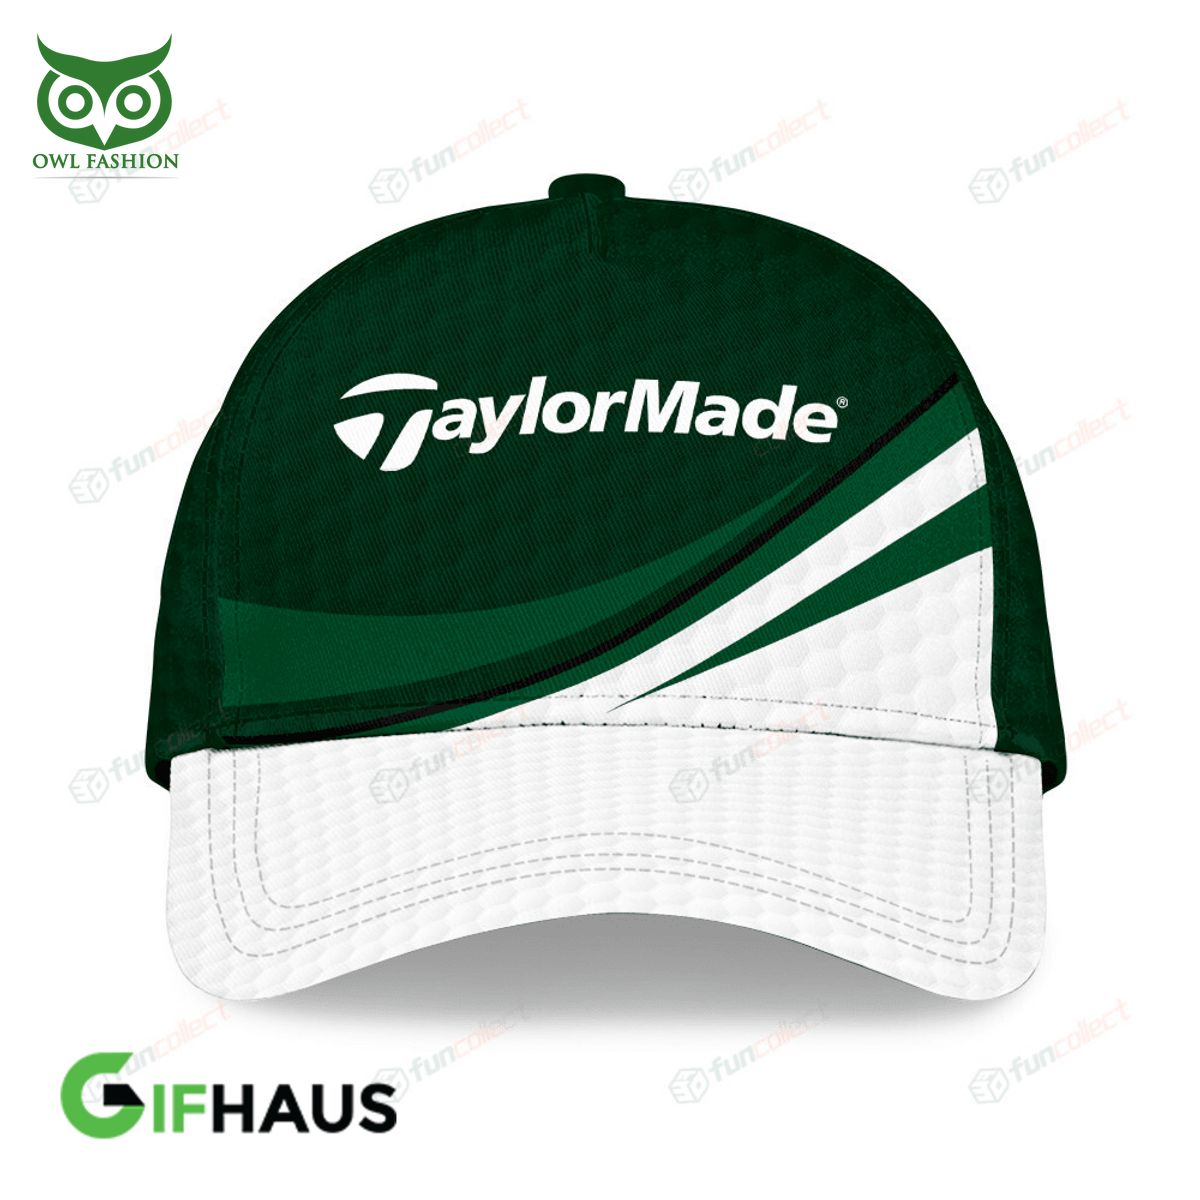 taylor made golf championship classic cap 1 4wn7v